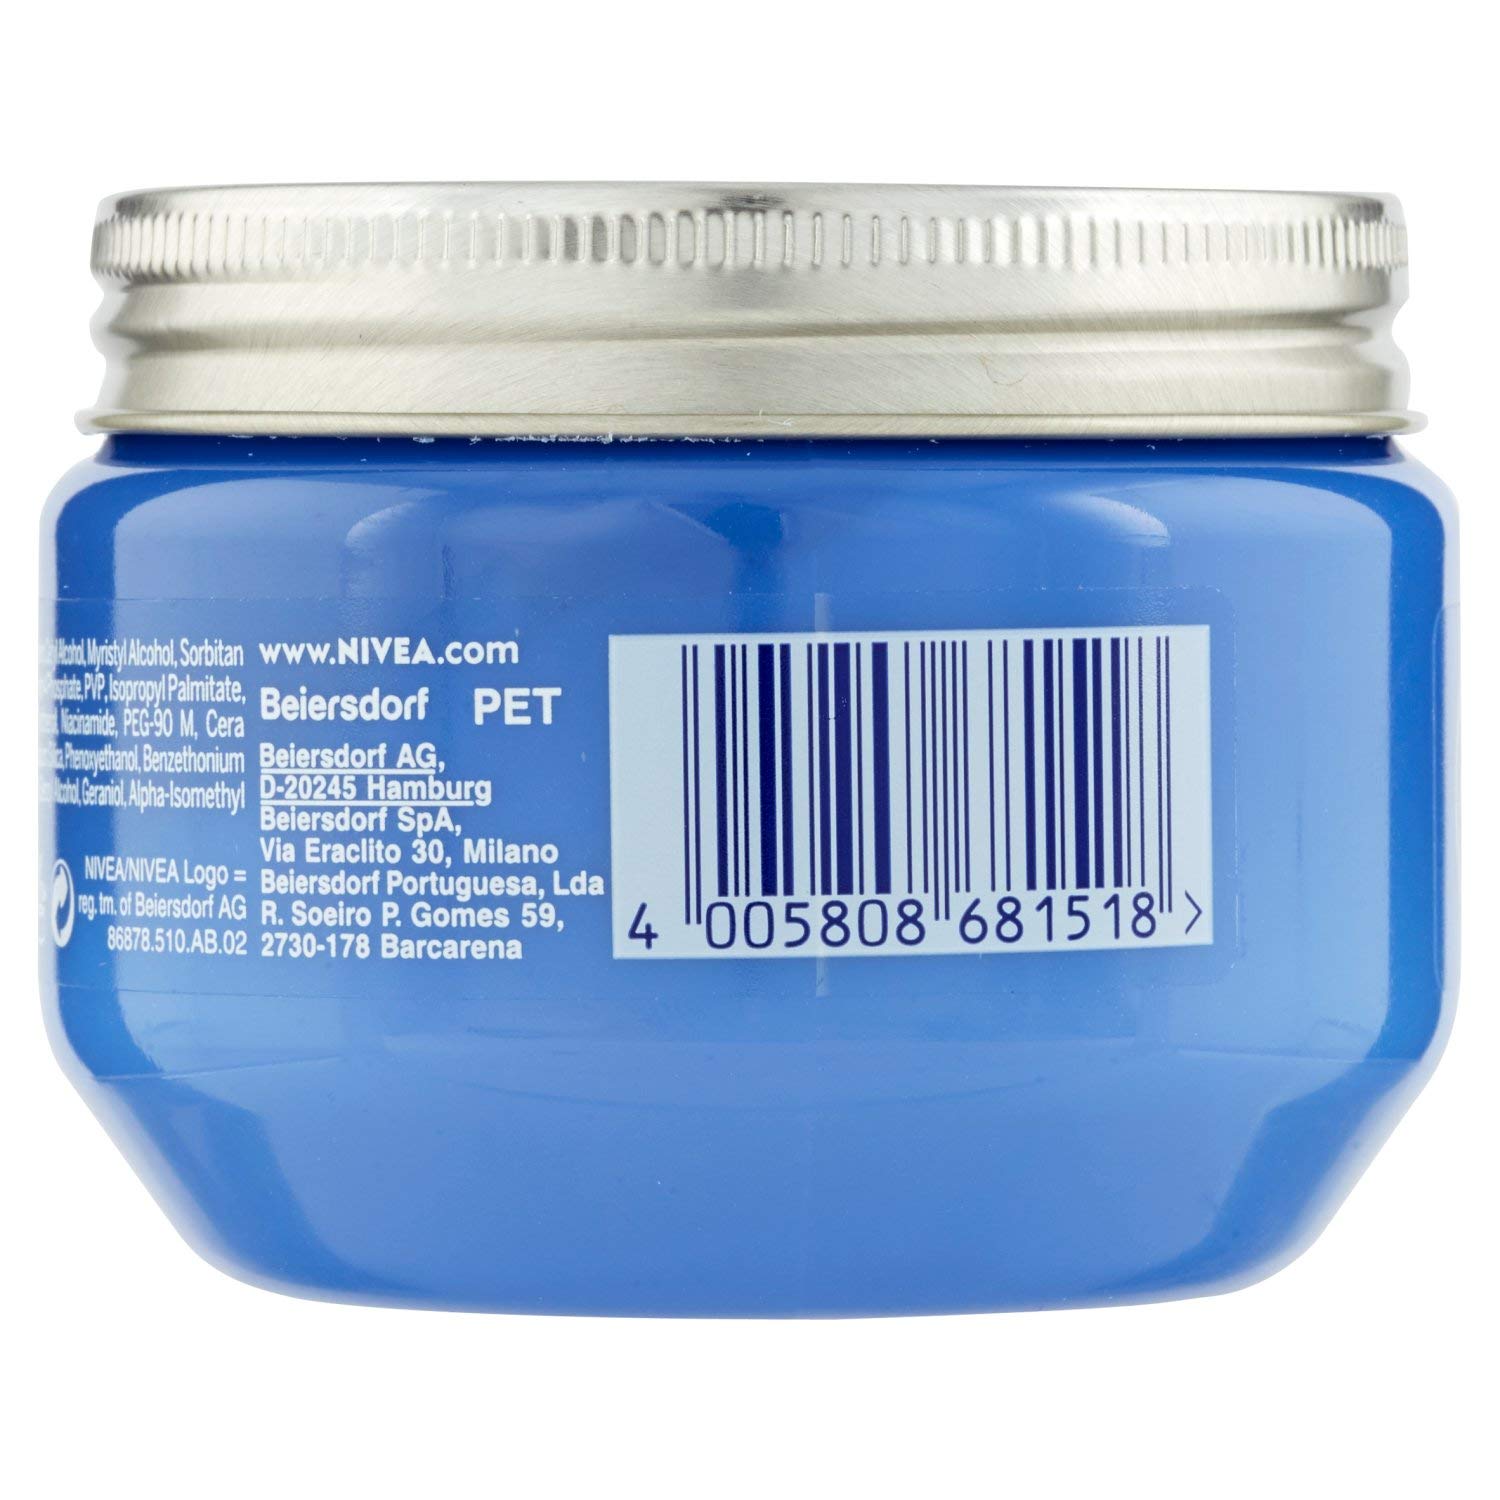  NIVEA Vase Cream Strong Gel 3 150 86 878 Ml Product Hairstyle Hair